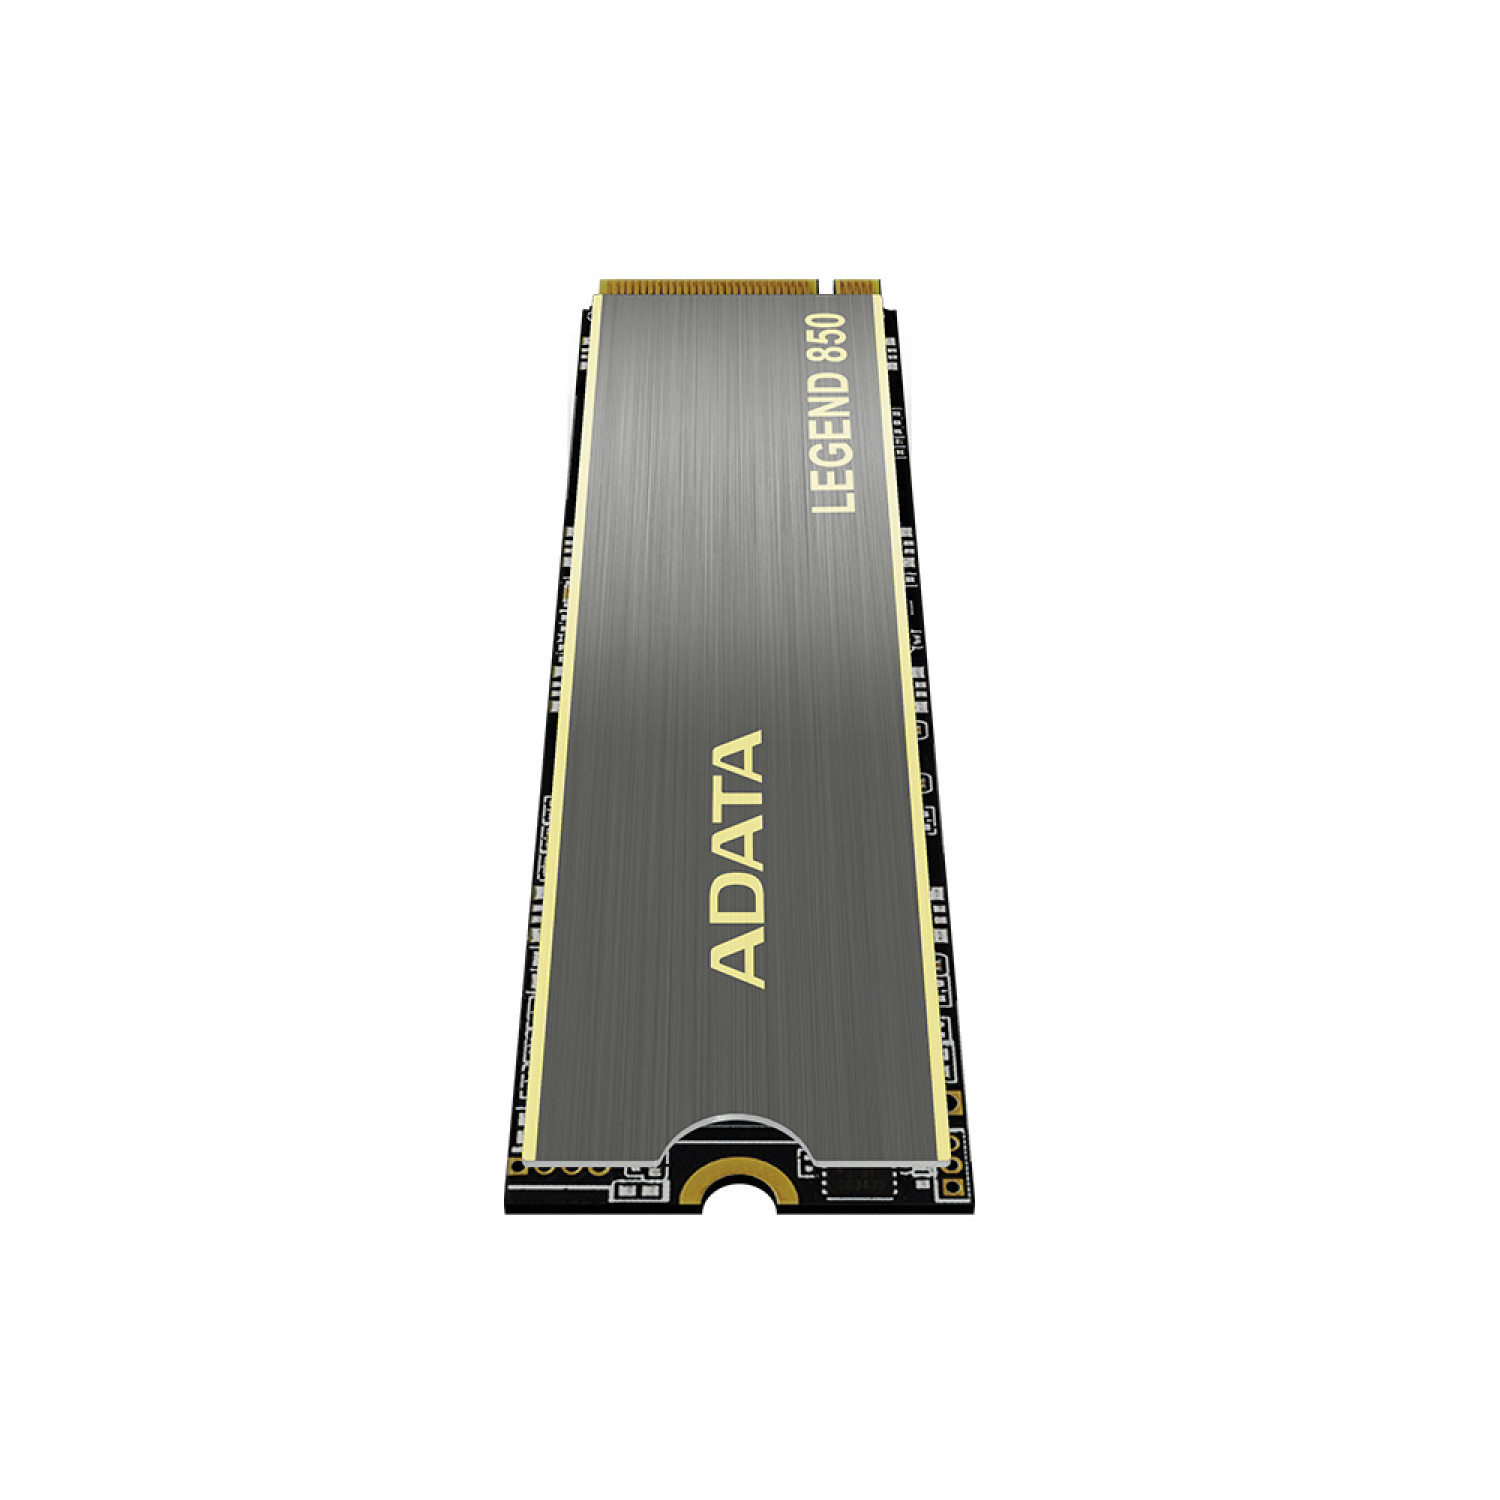 حافظه اس اس دی ADATA Legend 850 512GB - for PS5-5